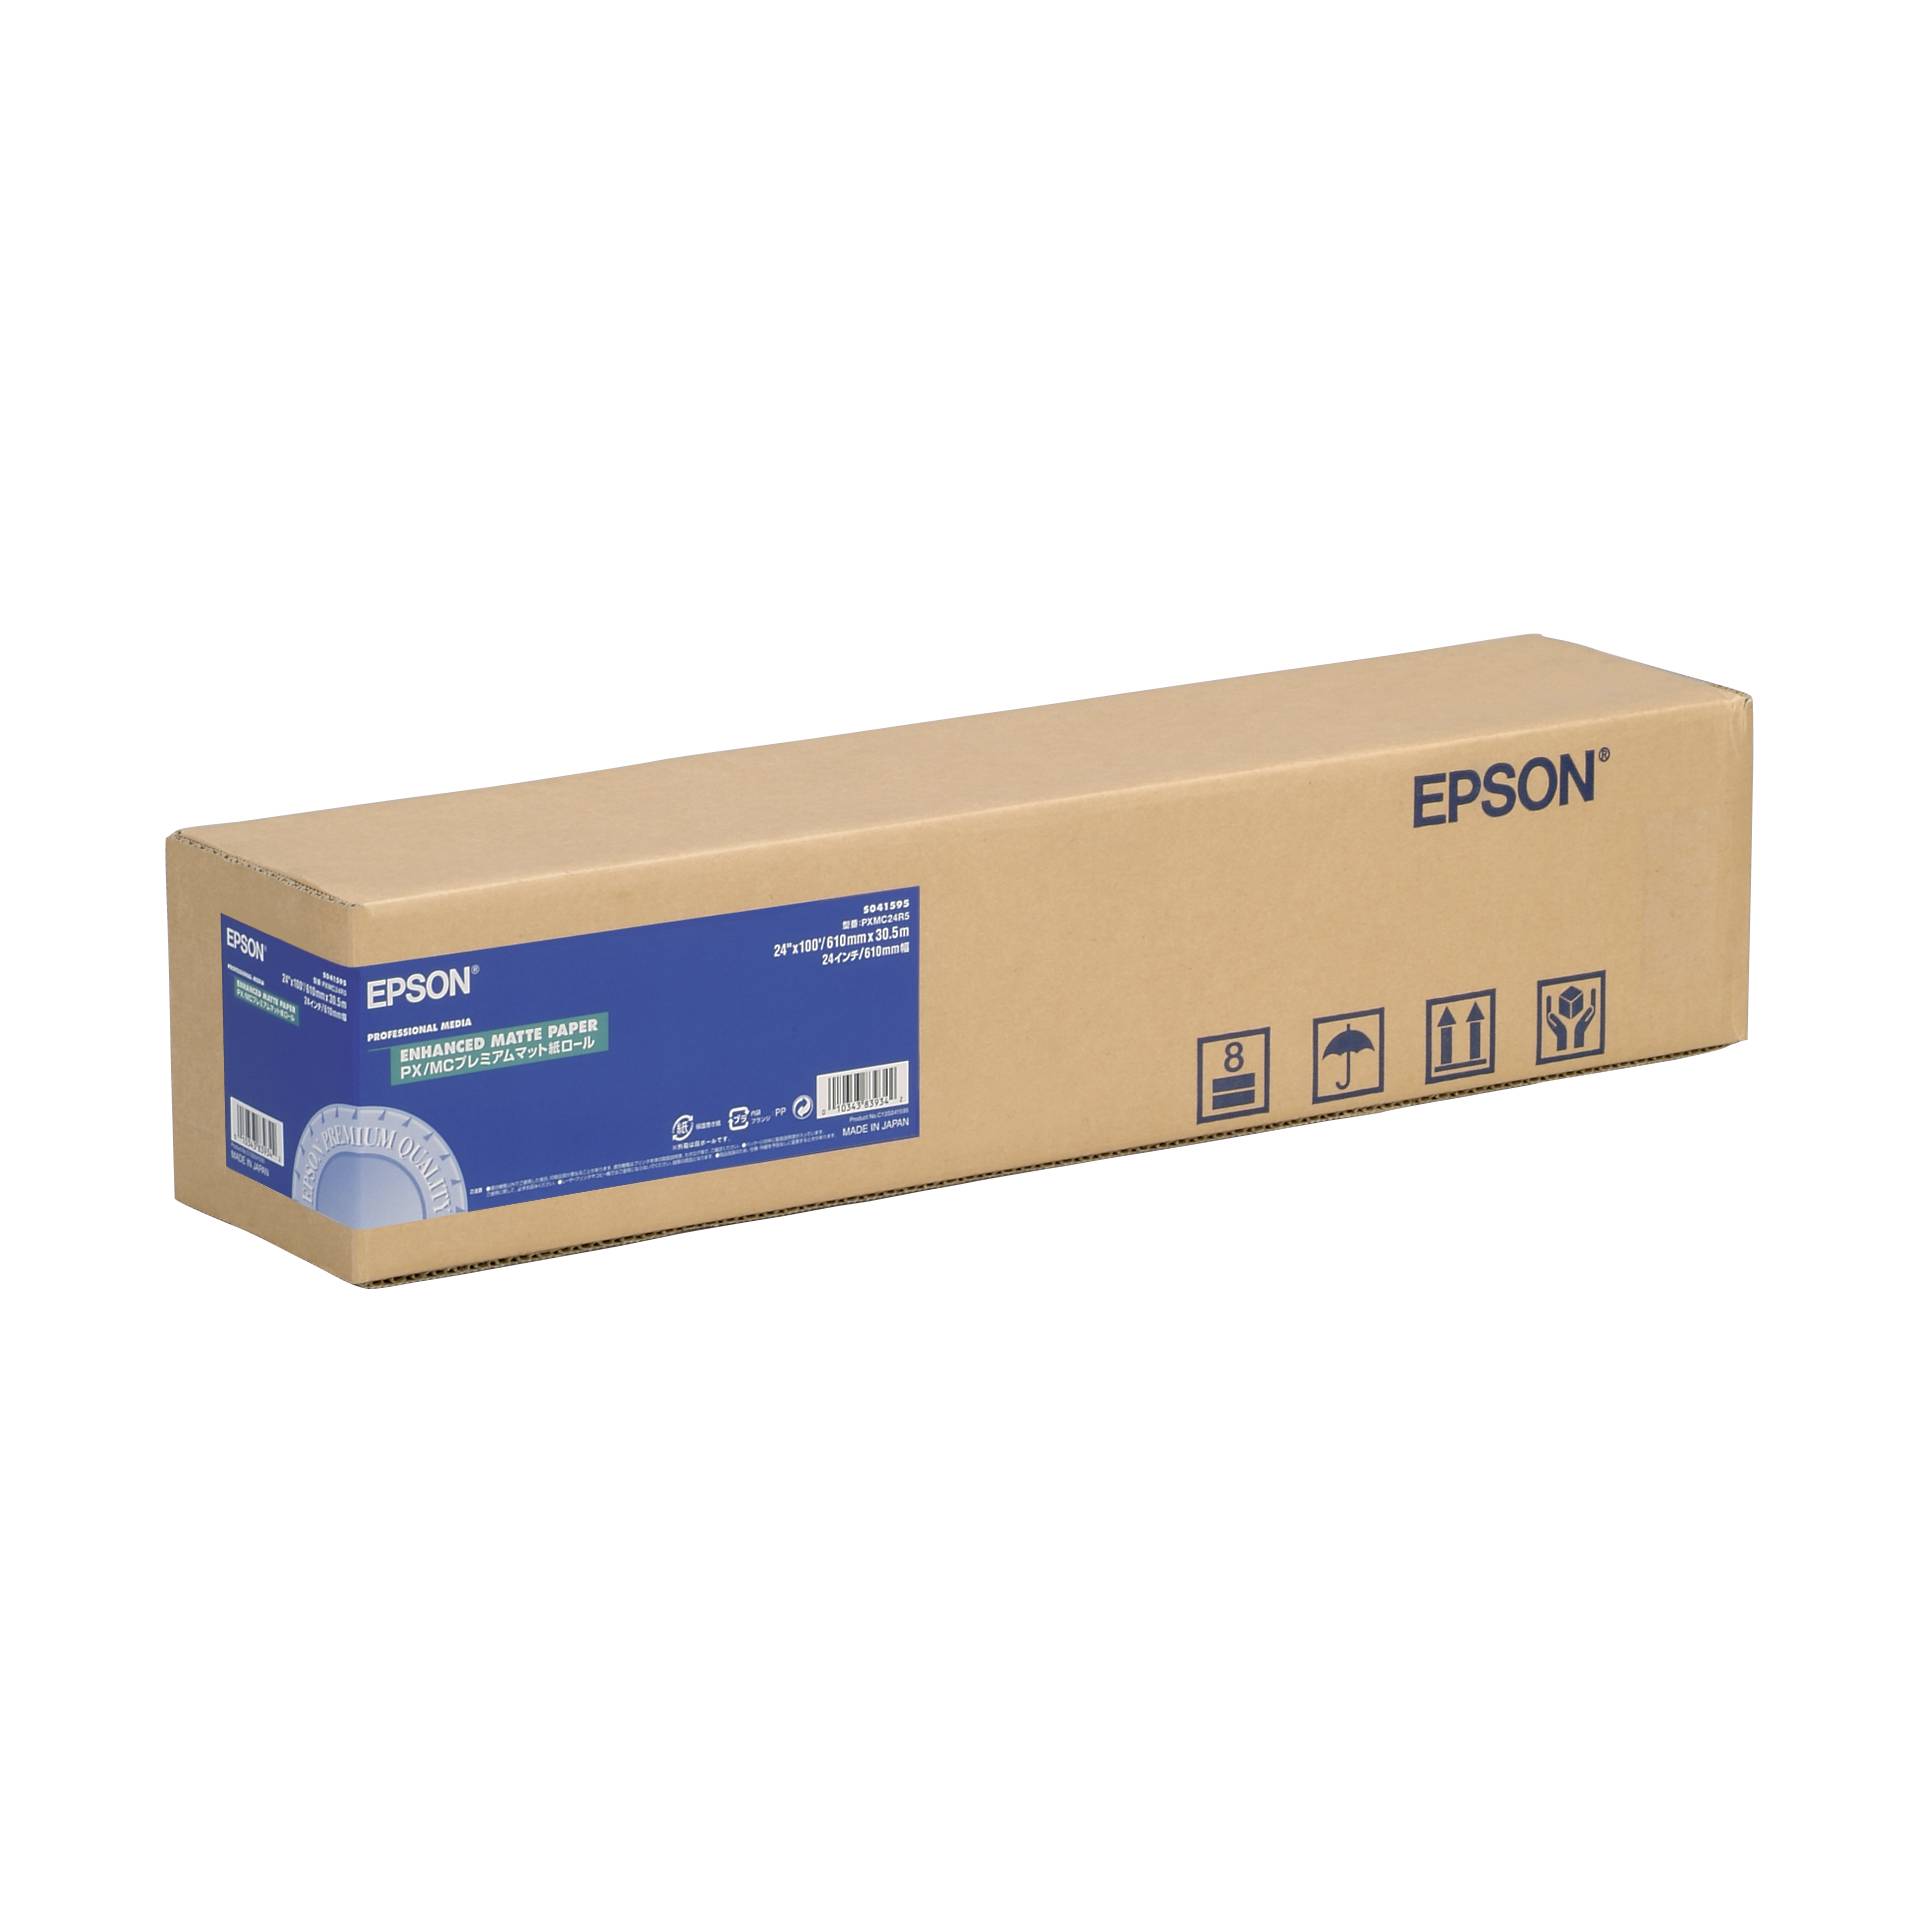 Epson Enhanced carta opaco 61 cm x 30,5 m 194 g    S 041595